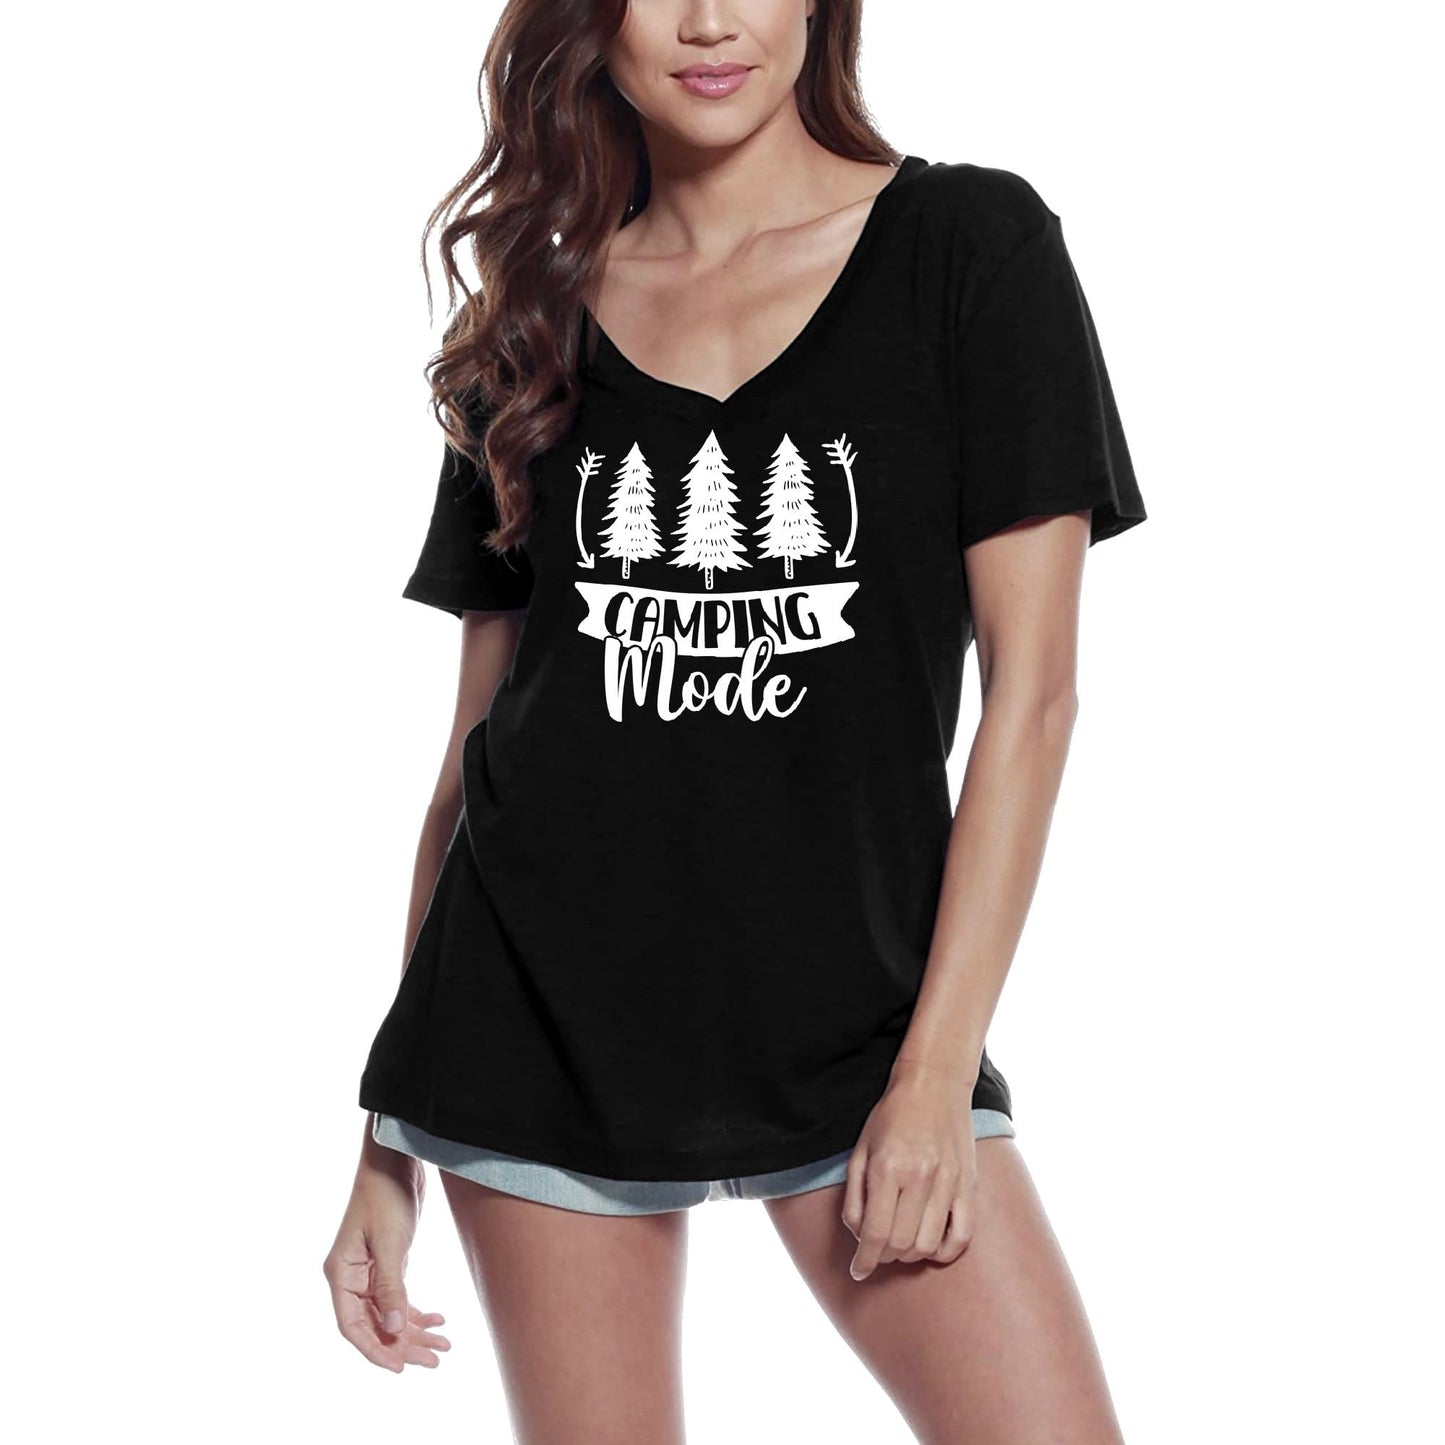 ULTRABASIC Women's T-Shirt Camping Mode - Funny Camp Tee Shirt